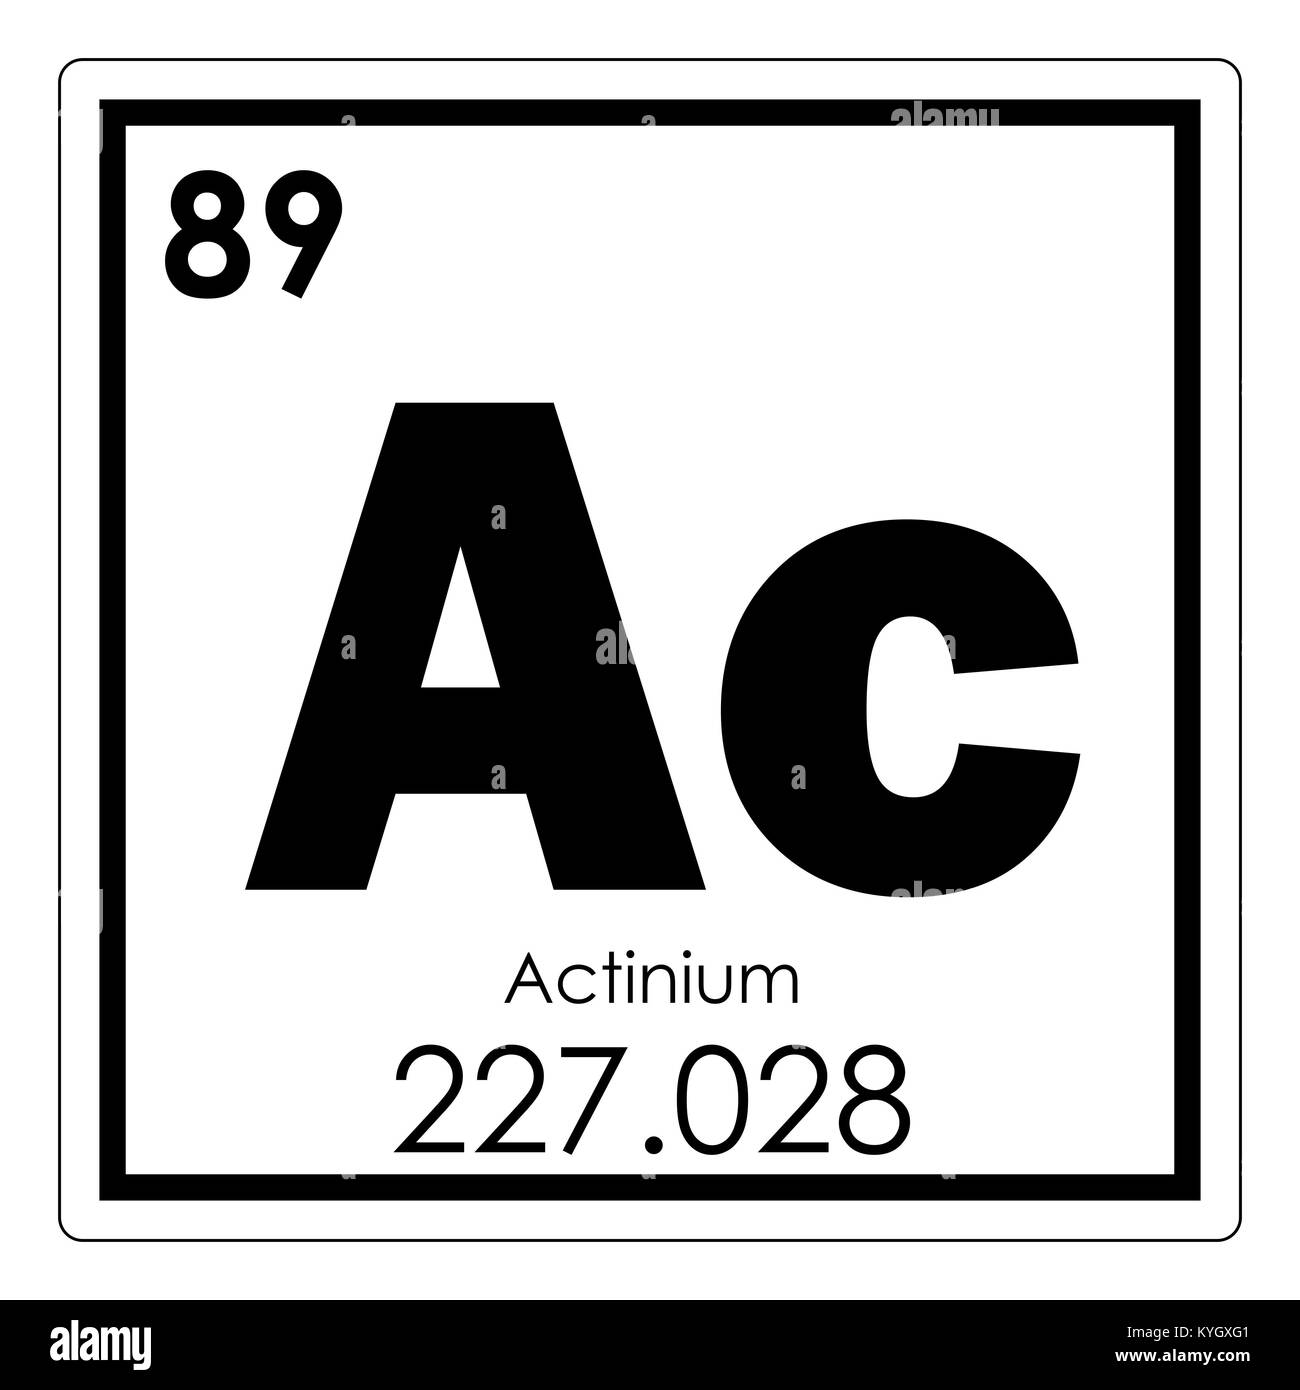 Actinium chemical element periodic table science symbol Stock Photo - Alamy